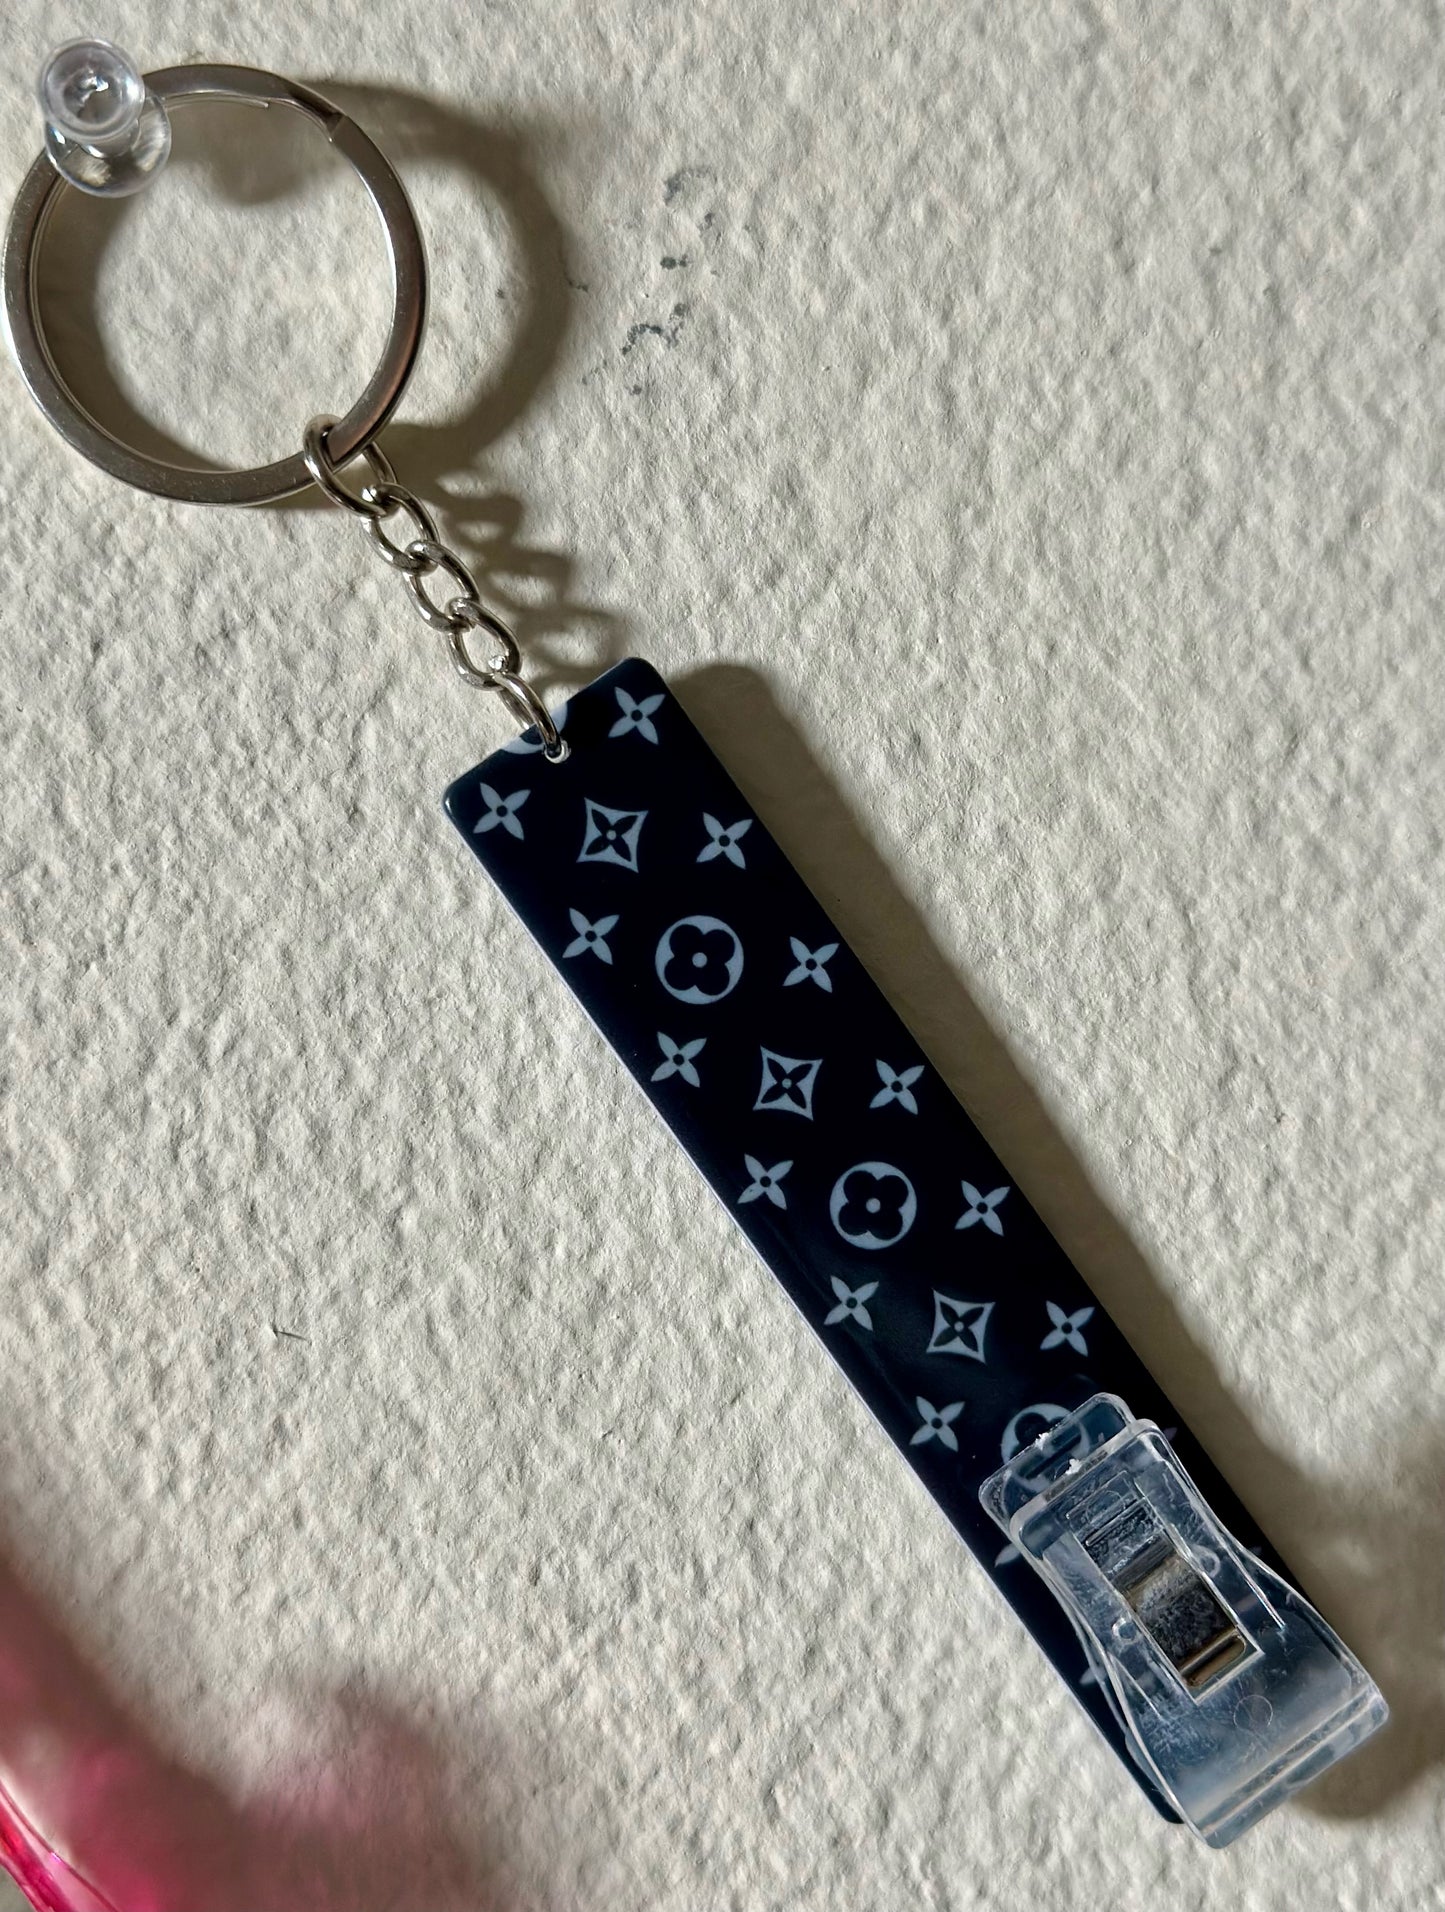 Acrylic Card Grabber Keychain for Long Nails, Debit Bank Card Grabber